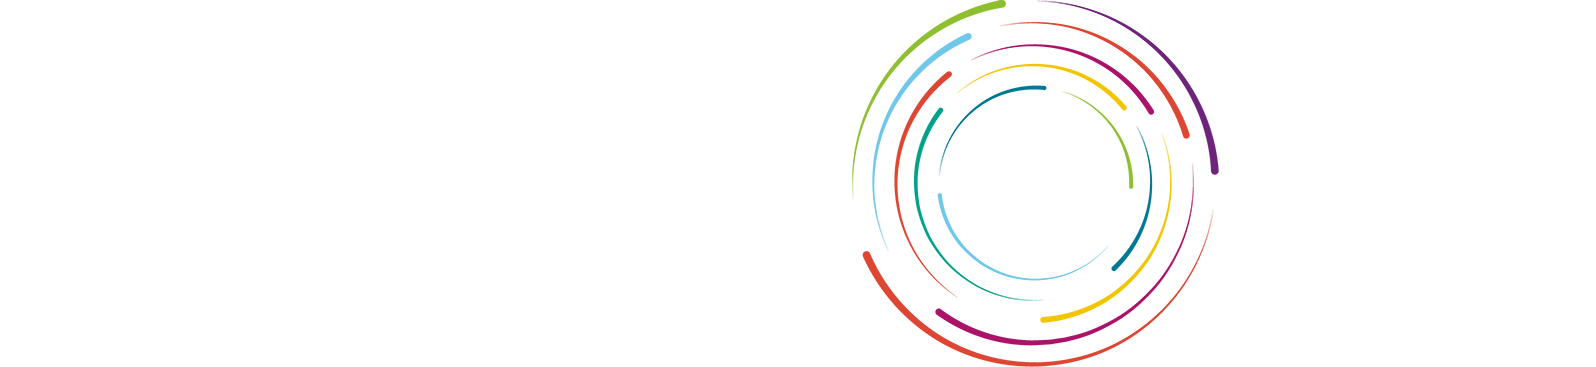 SDGs @ UofT logo